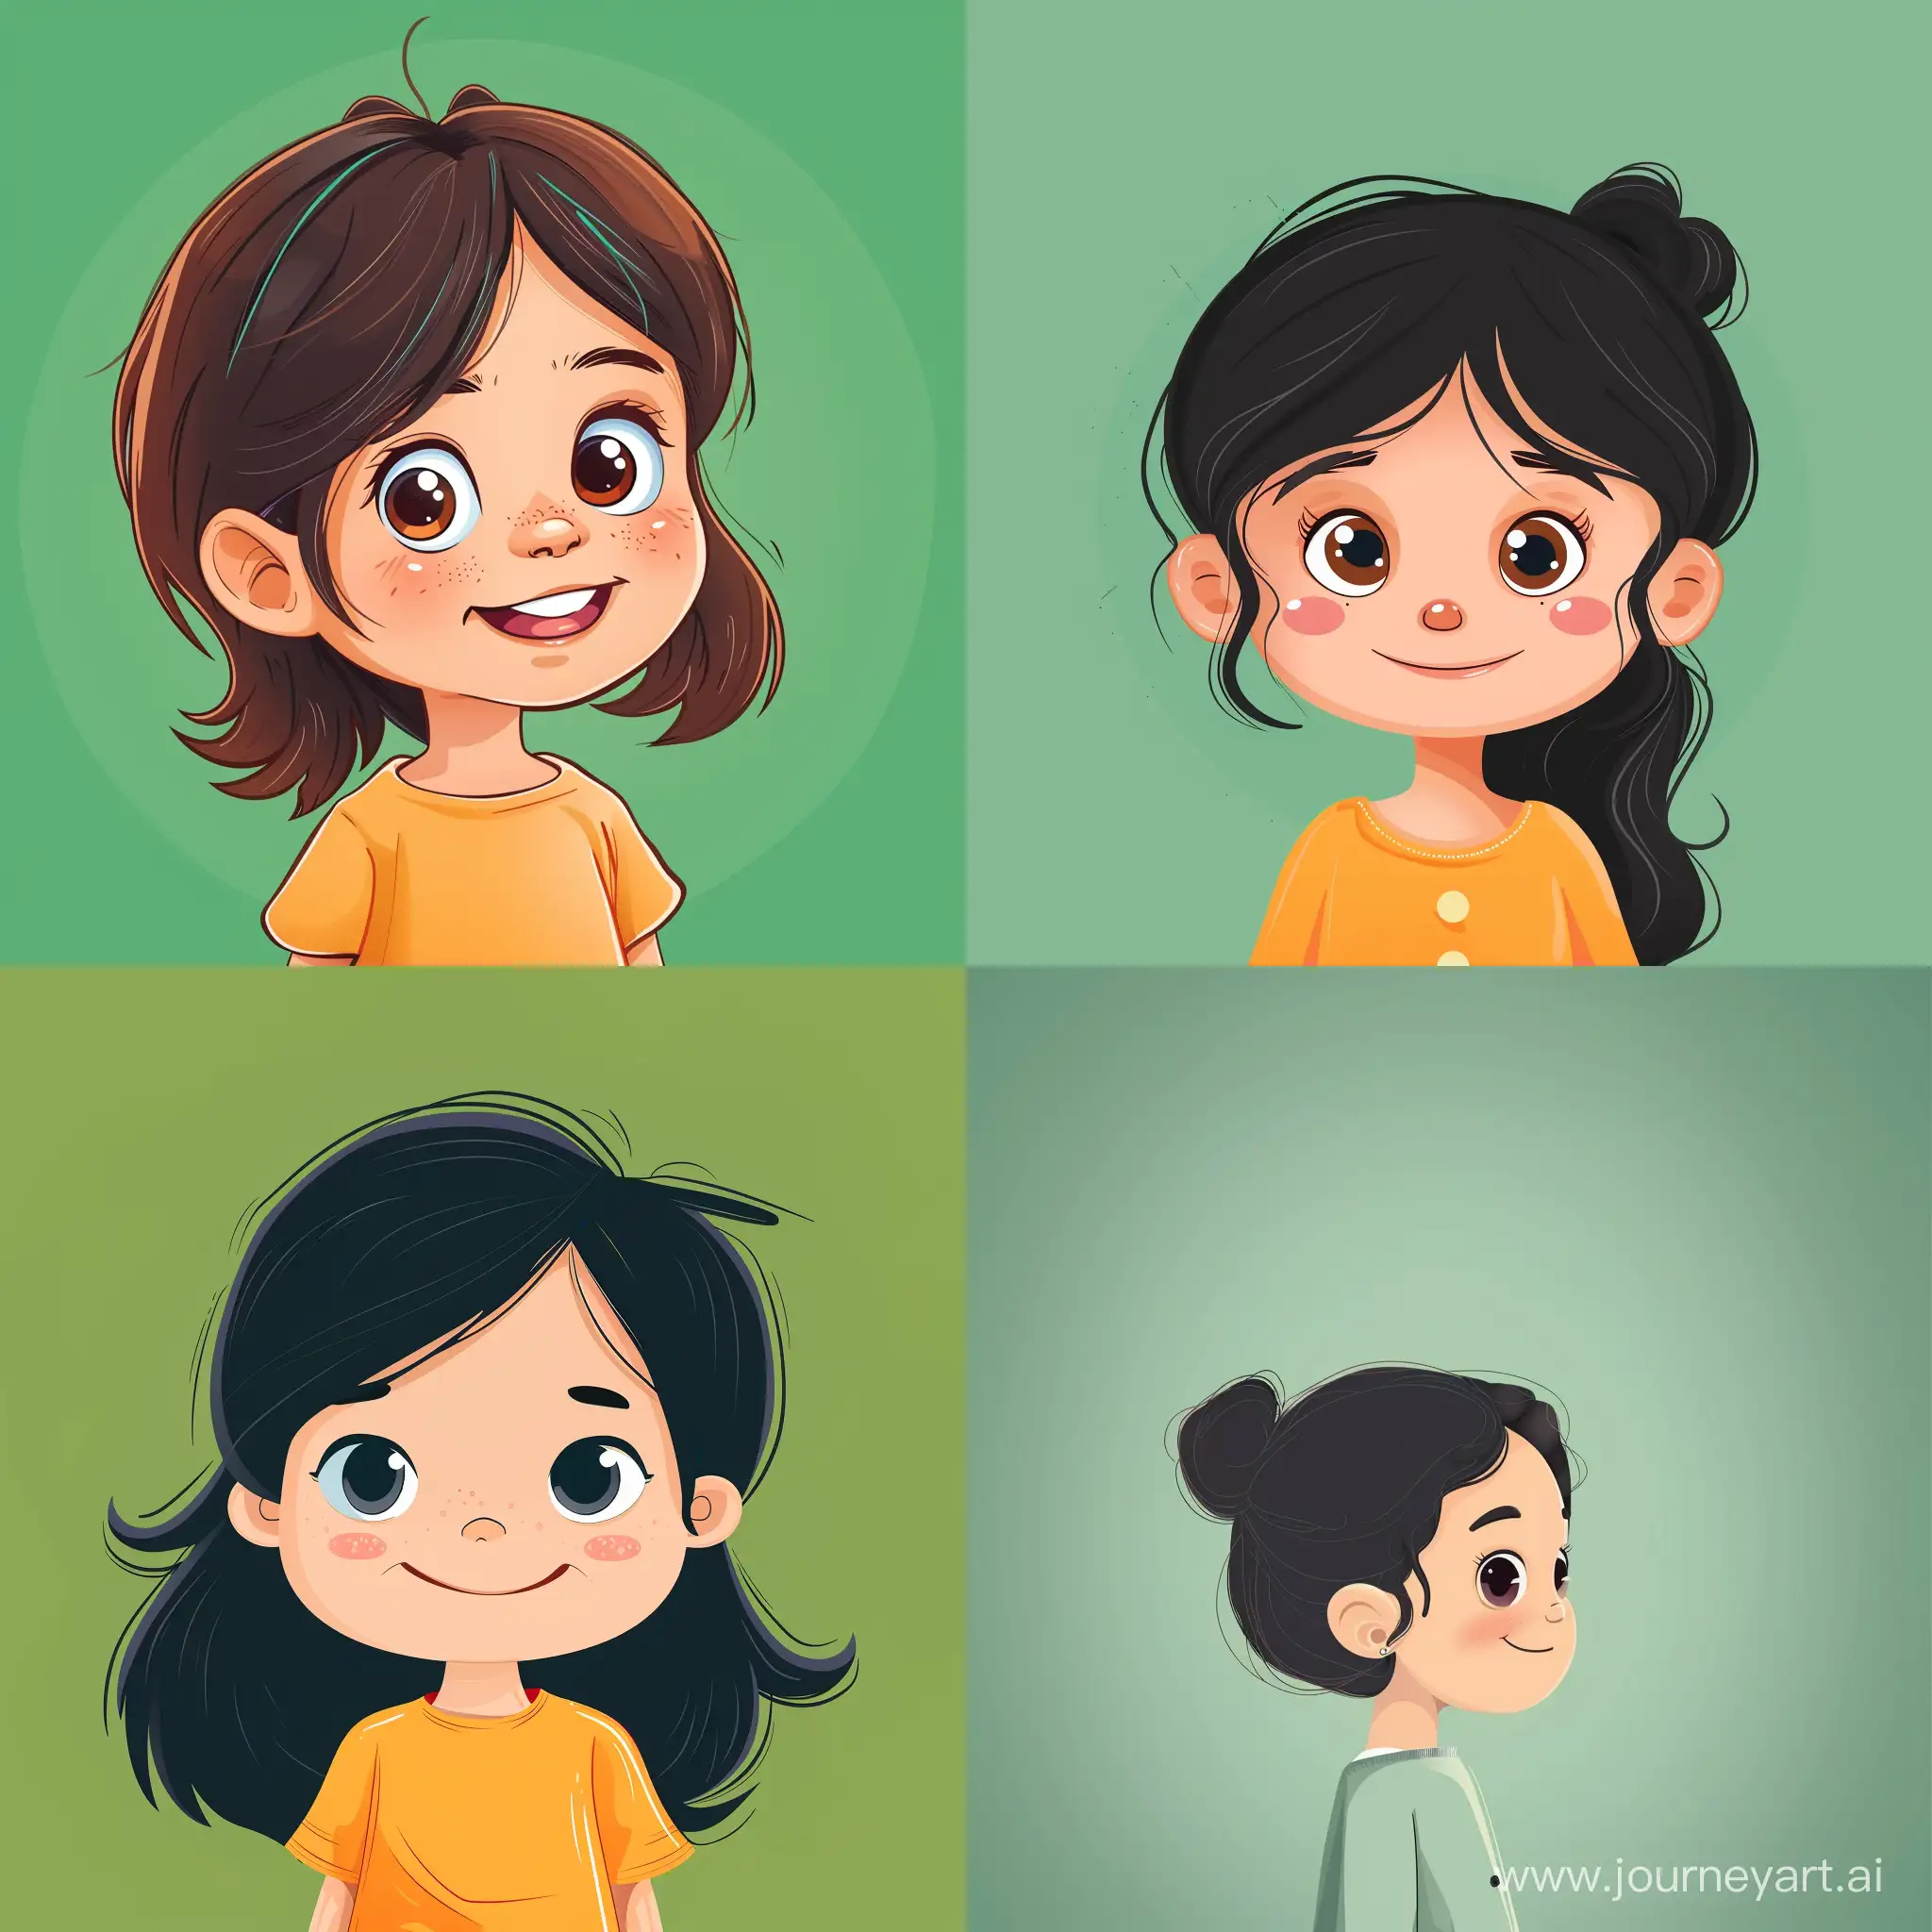 Cheerful-Little-Girl-on-Simple-Green-Background-Adobe-Illustrator-Art